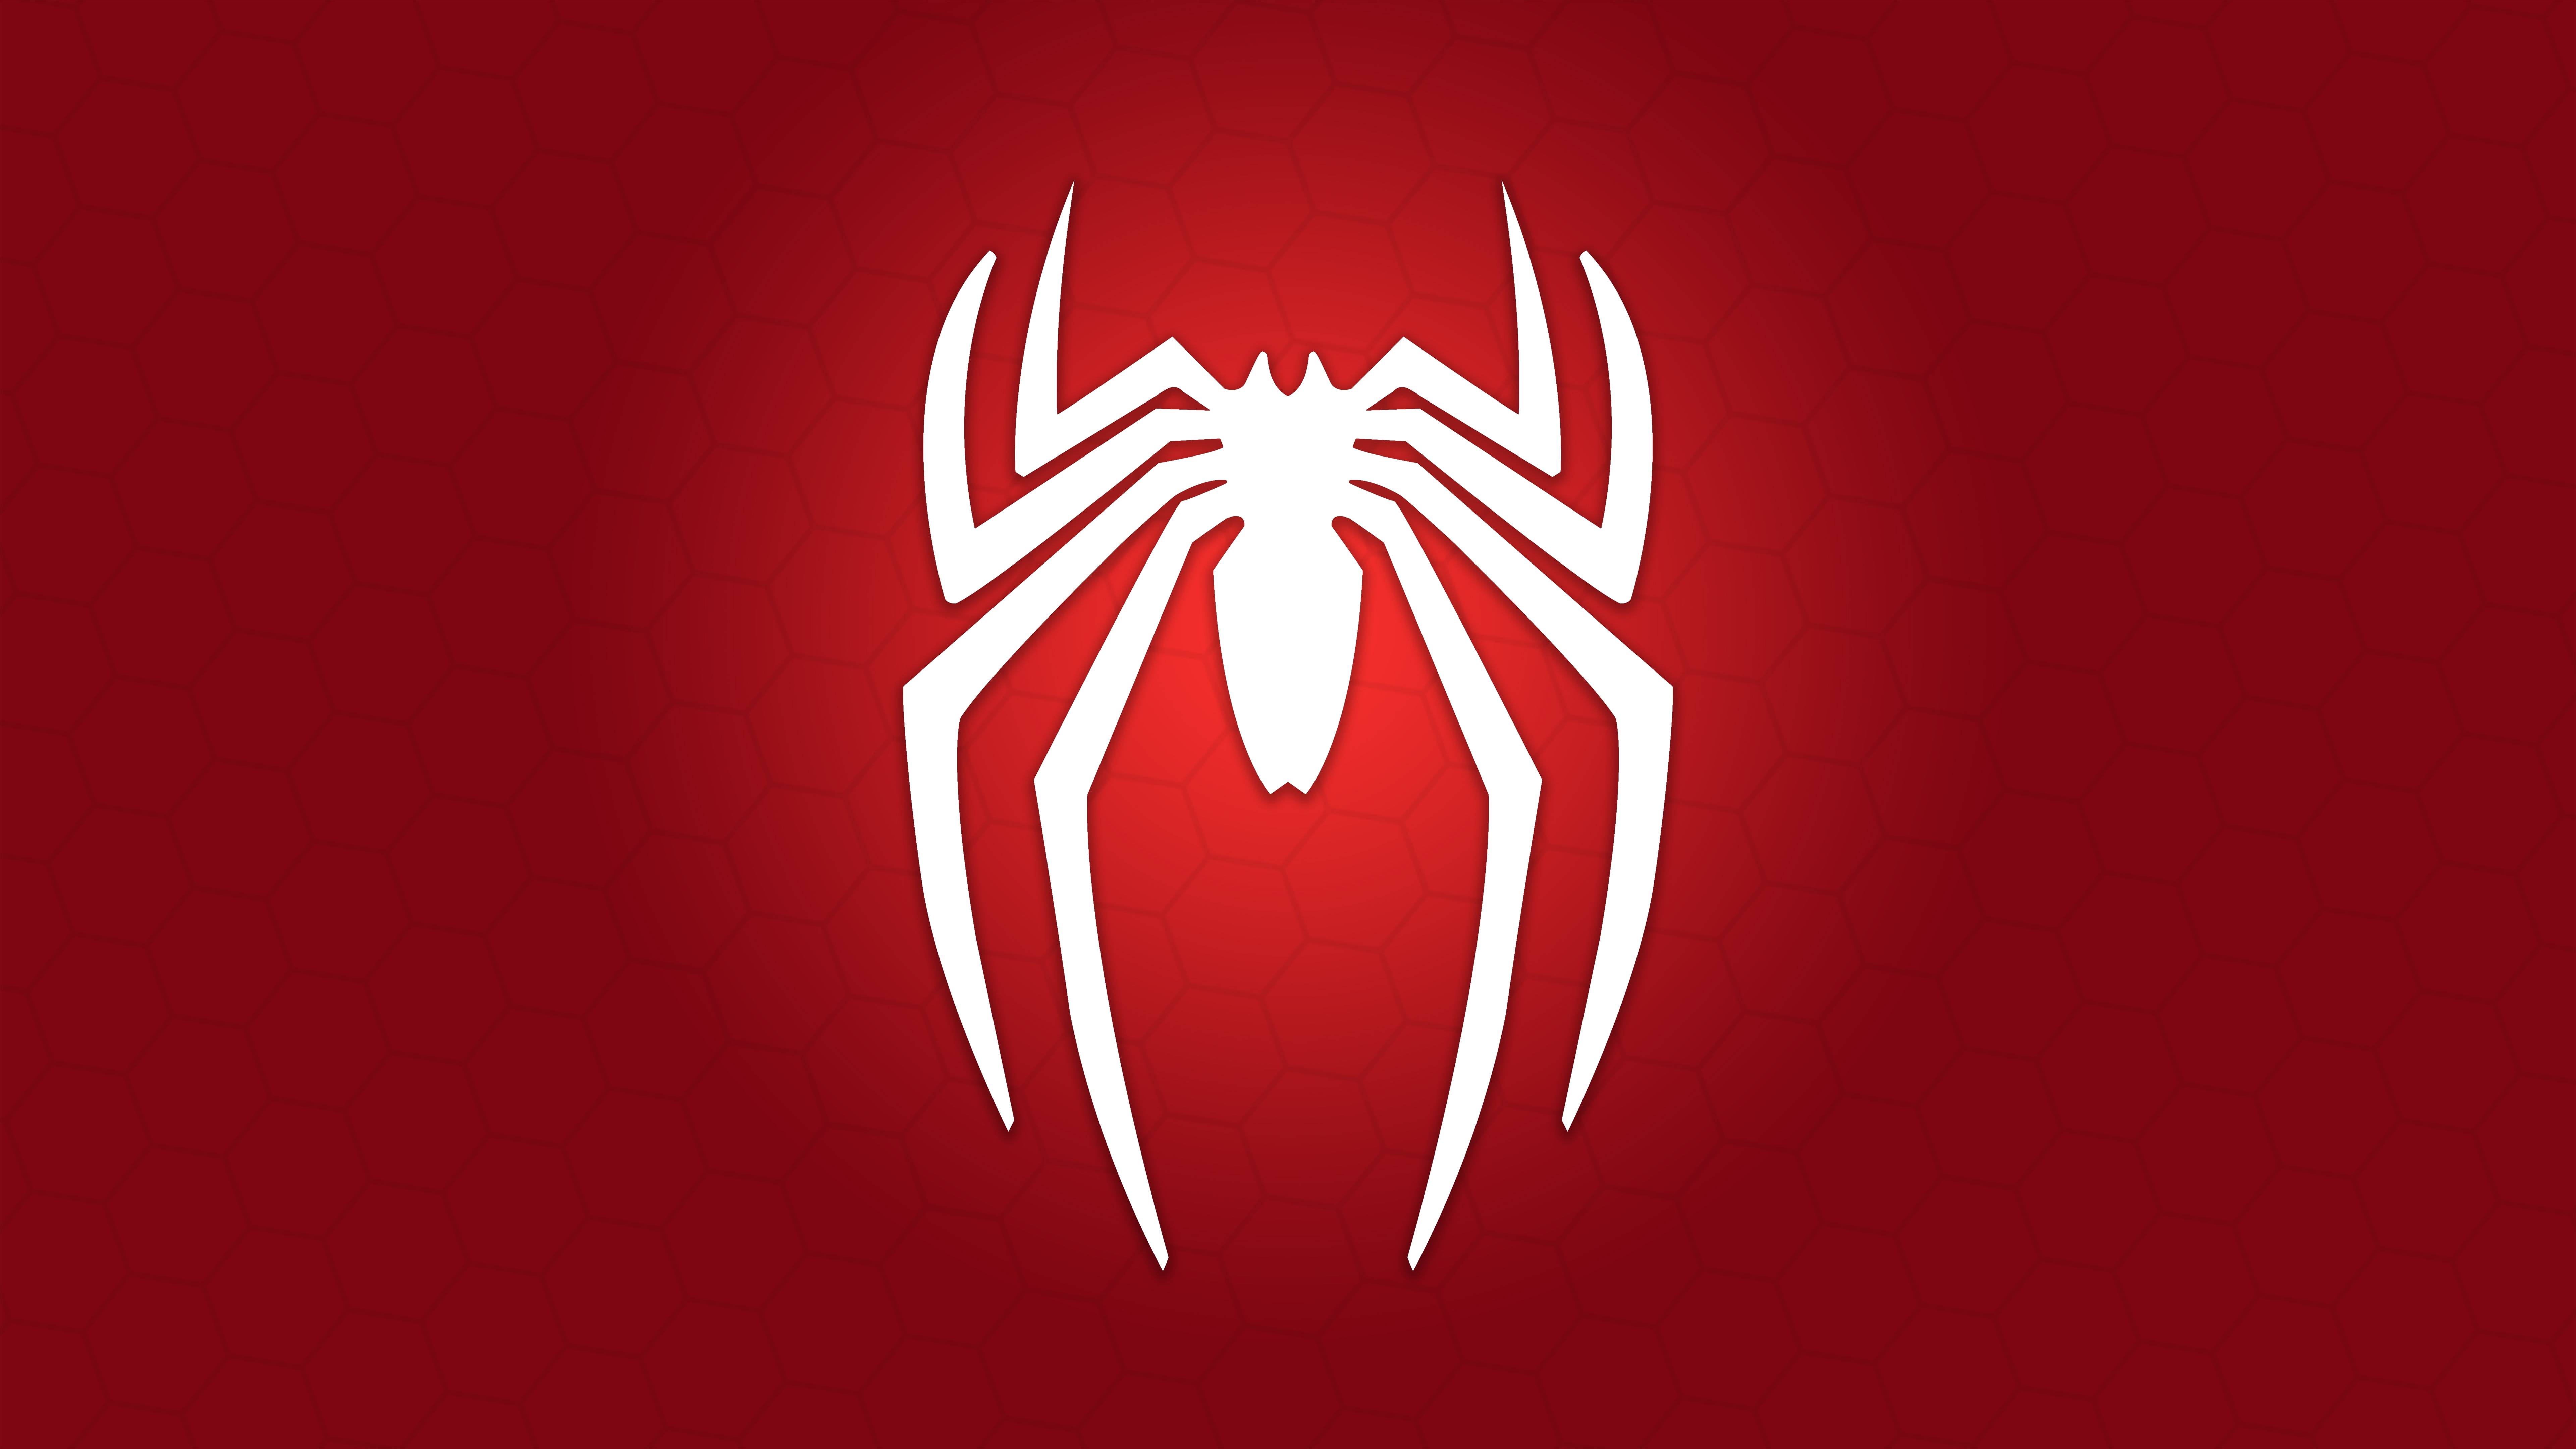 Spider-Man 8k Wallpapers - Top Free Spider-Man 8k Backgrounds ...